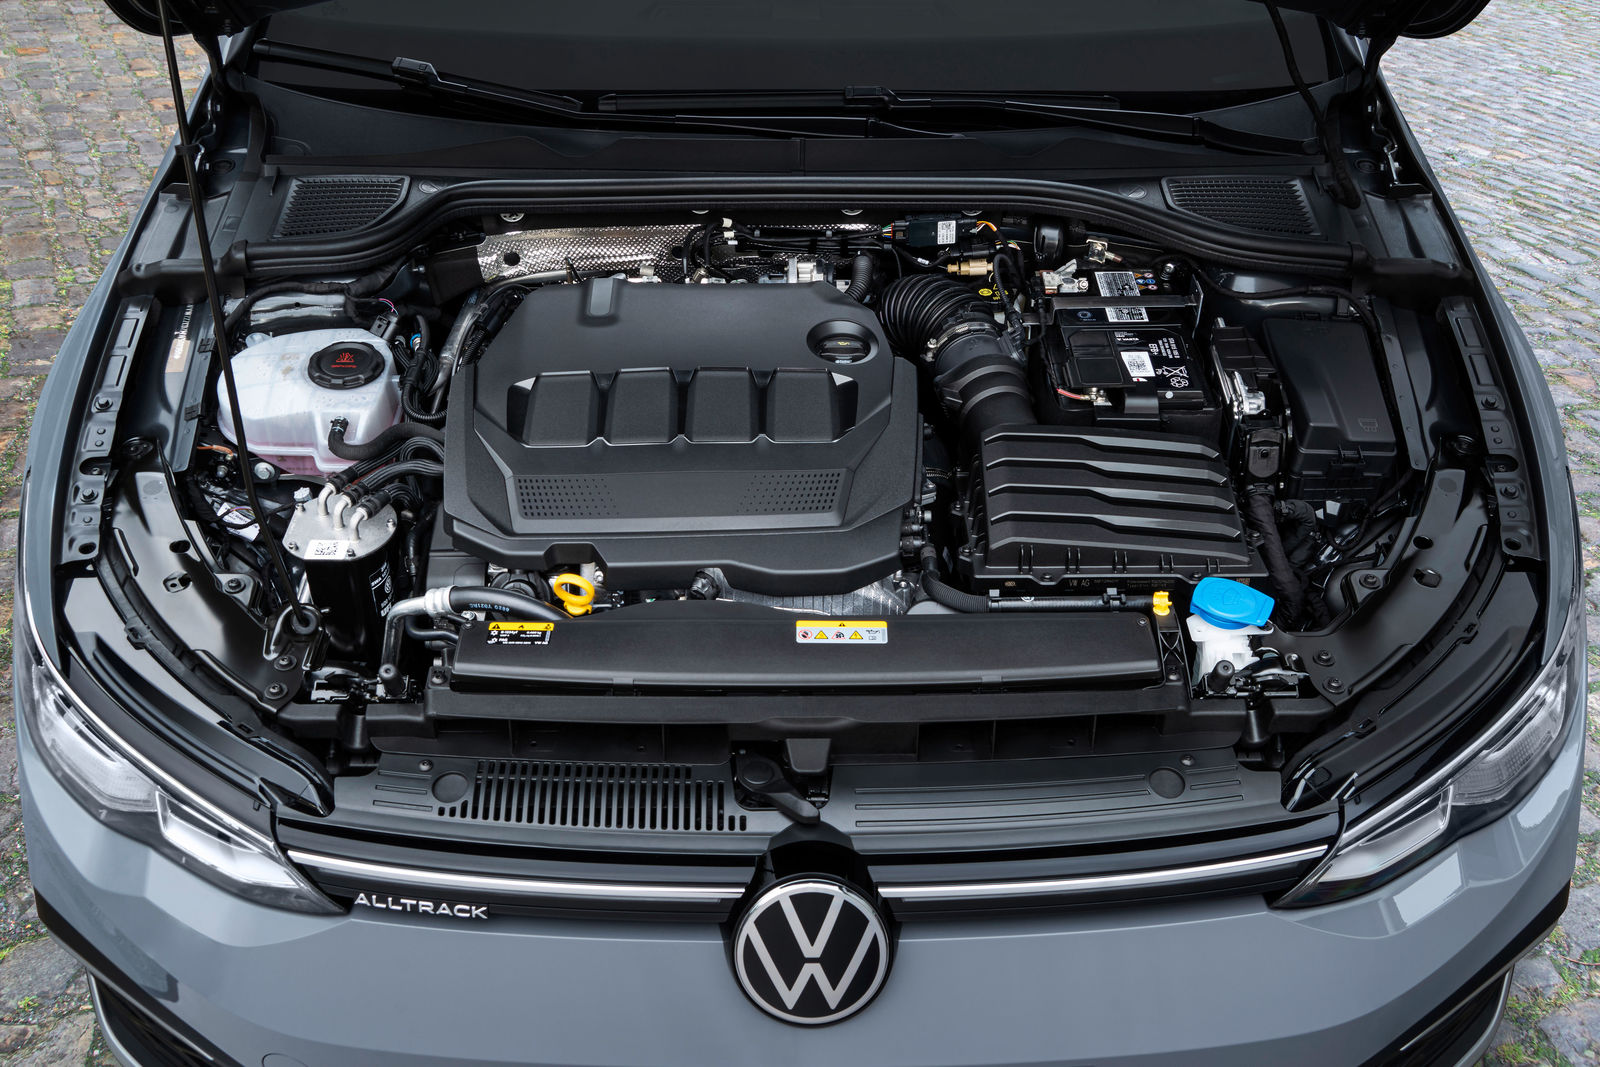 File:VW Passat B5 GP 2.0.JPG - Wikimedia Commons